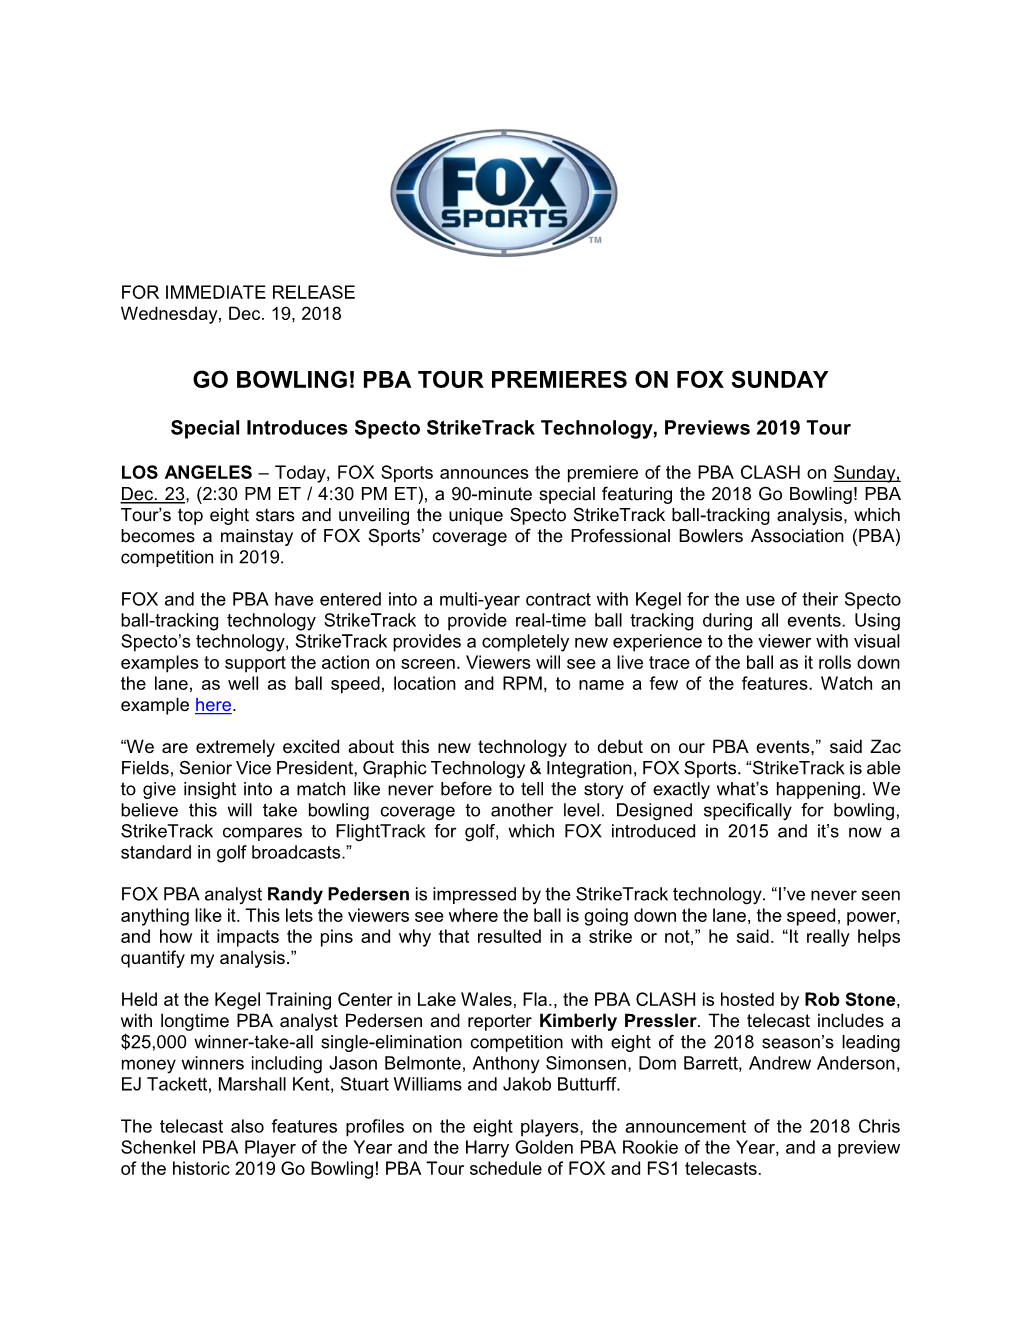 Go Bowling! Pba Tour Premieres on Fox Sunday